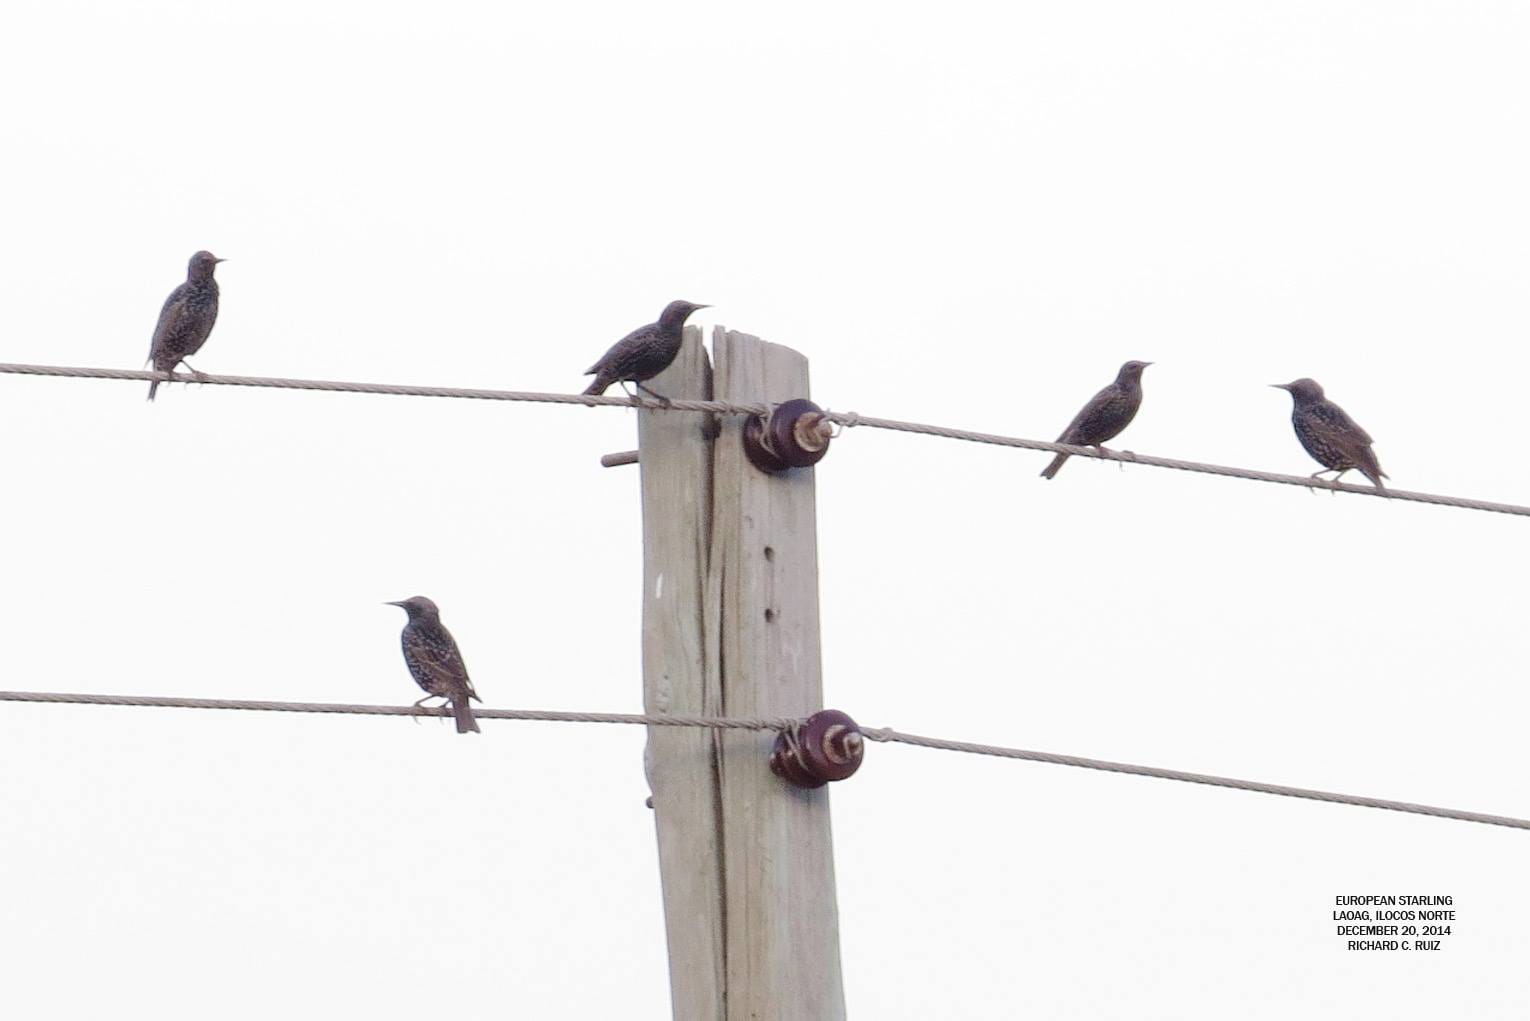 Common Starlings in Laoag, Ilocos Norte (17-23 December 2014.) Photo by Richard Ruiz.